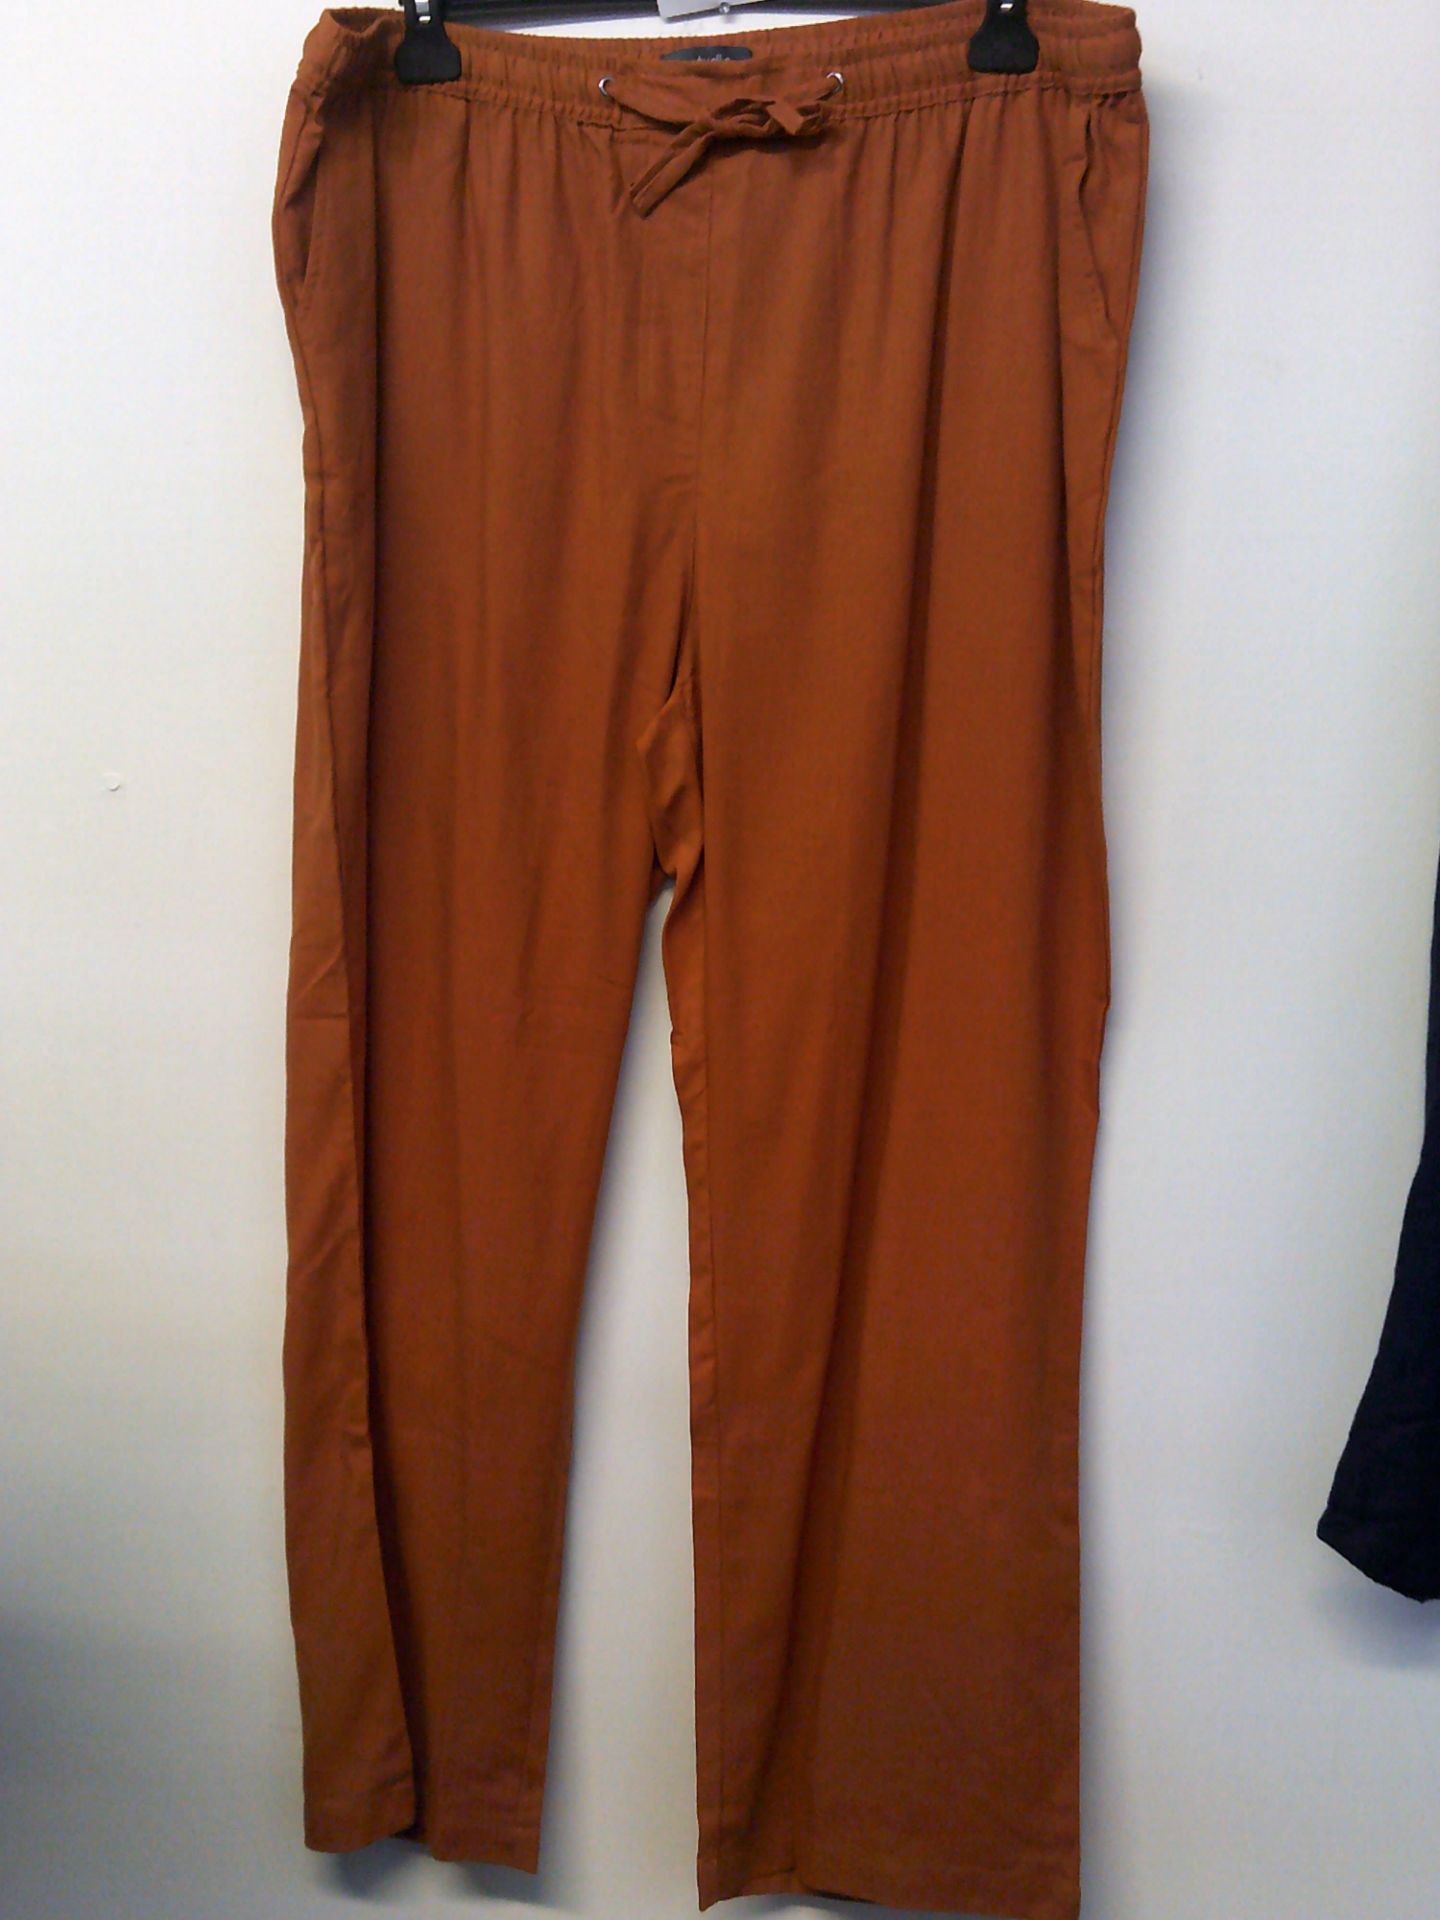 Studio Orange Linen Pants Size 20